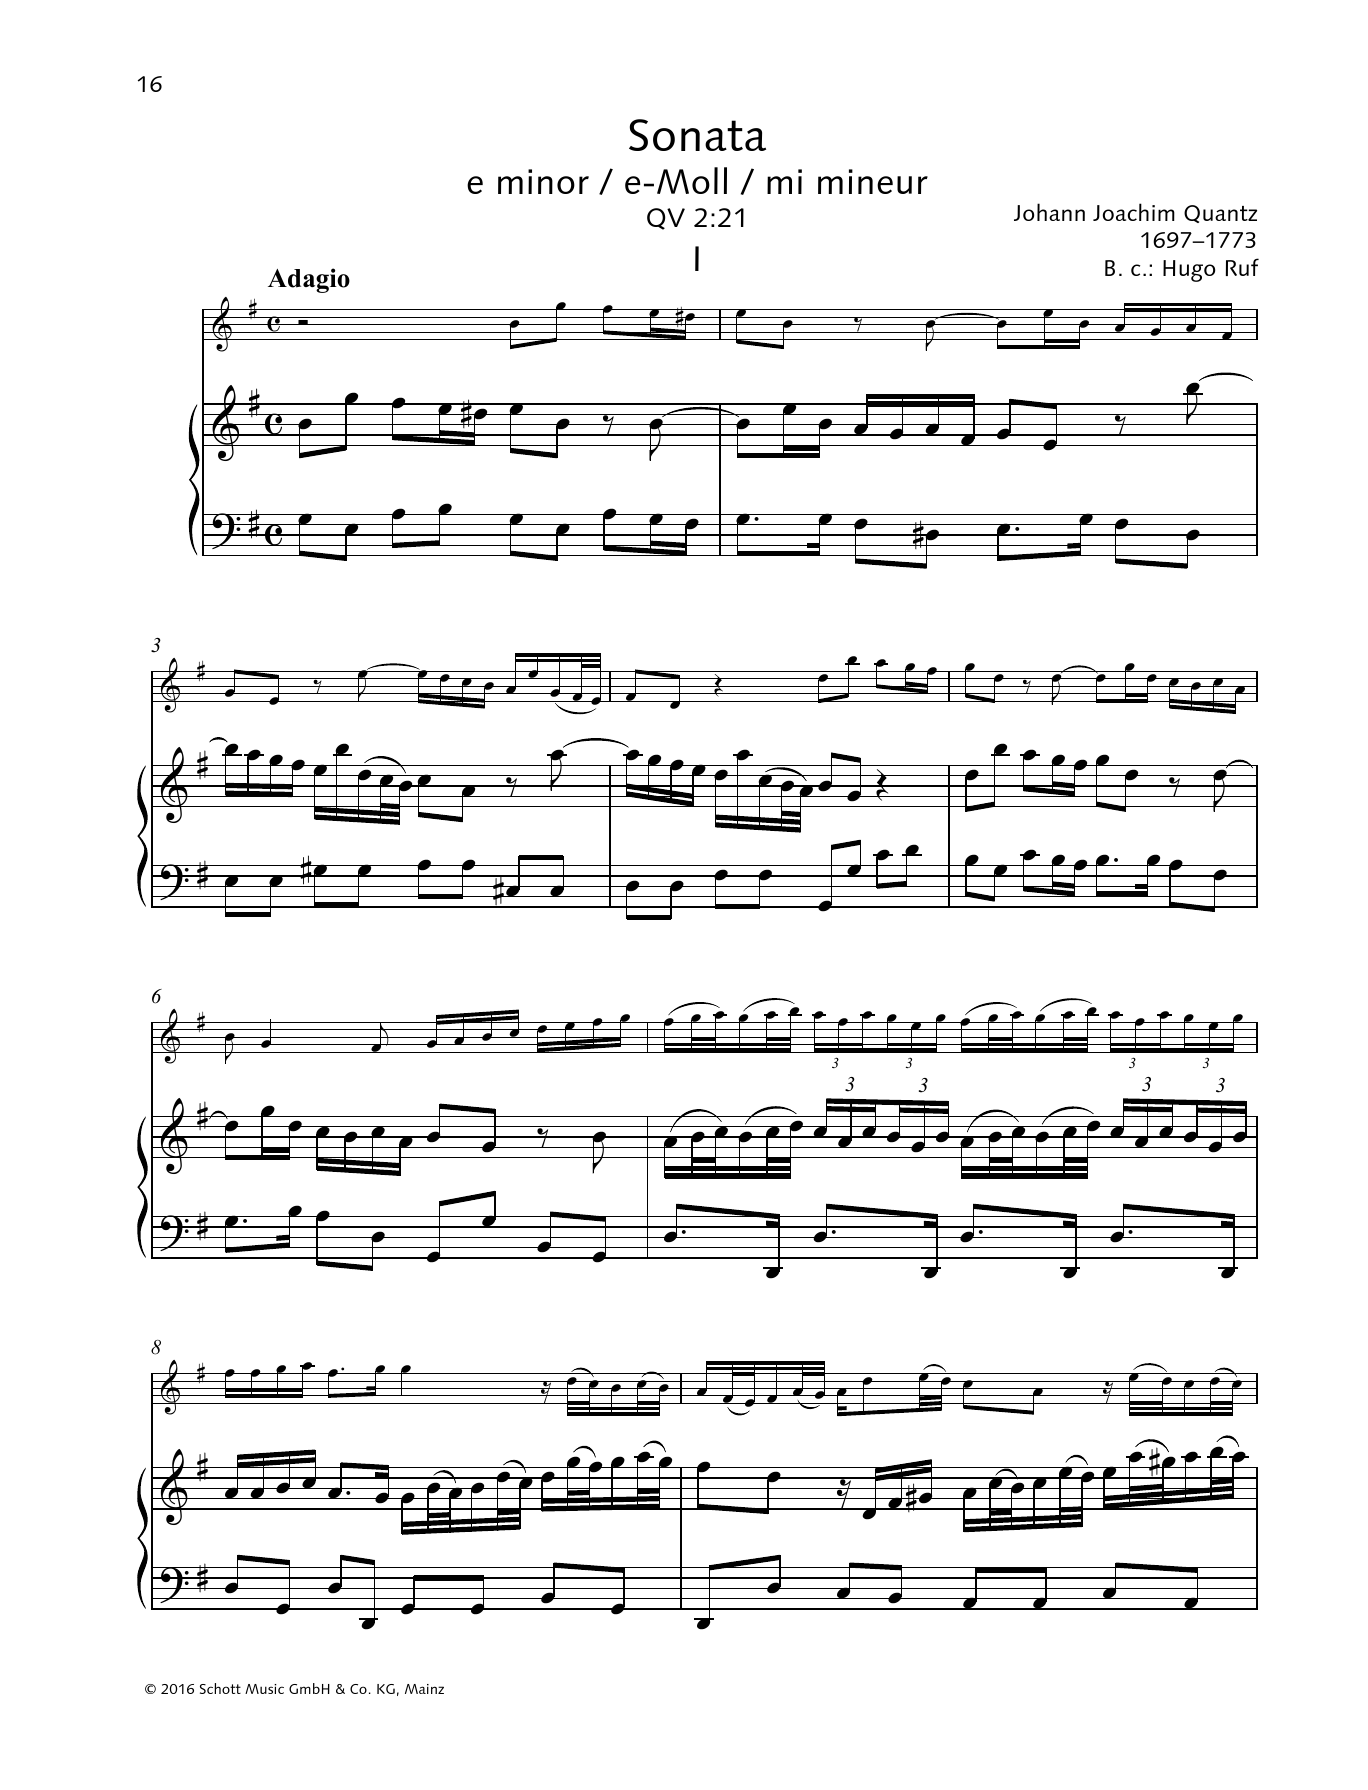 Download Baldassare Galuppi Sonata E minor Sheet Music and learn how to play String Solo PDF digital score in minutes